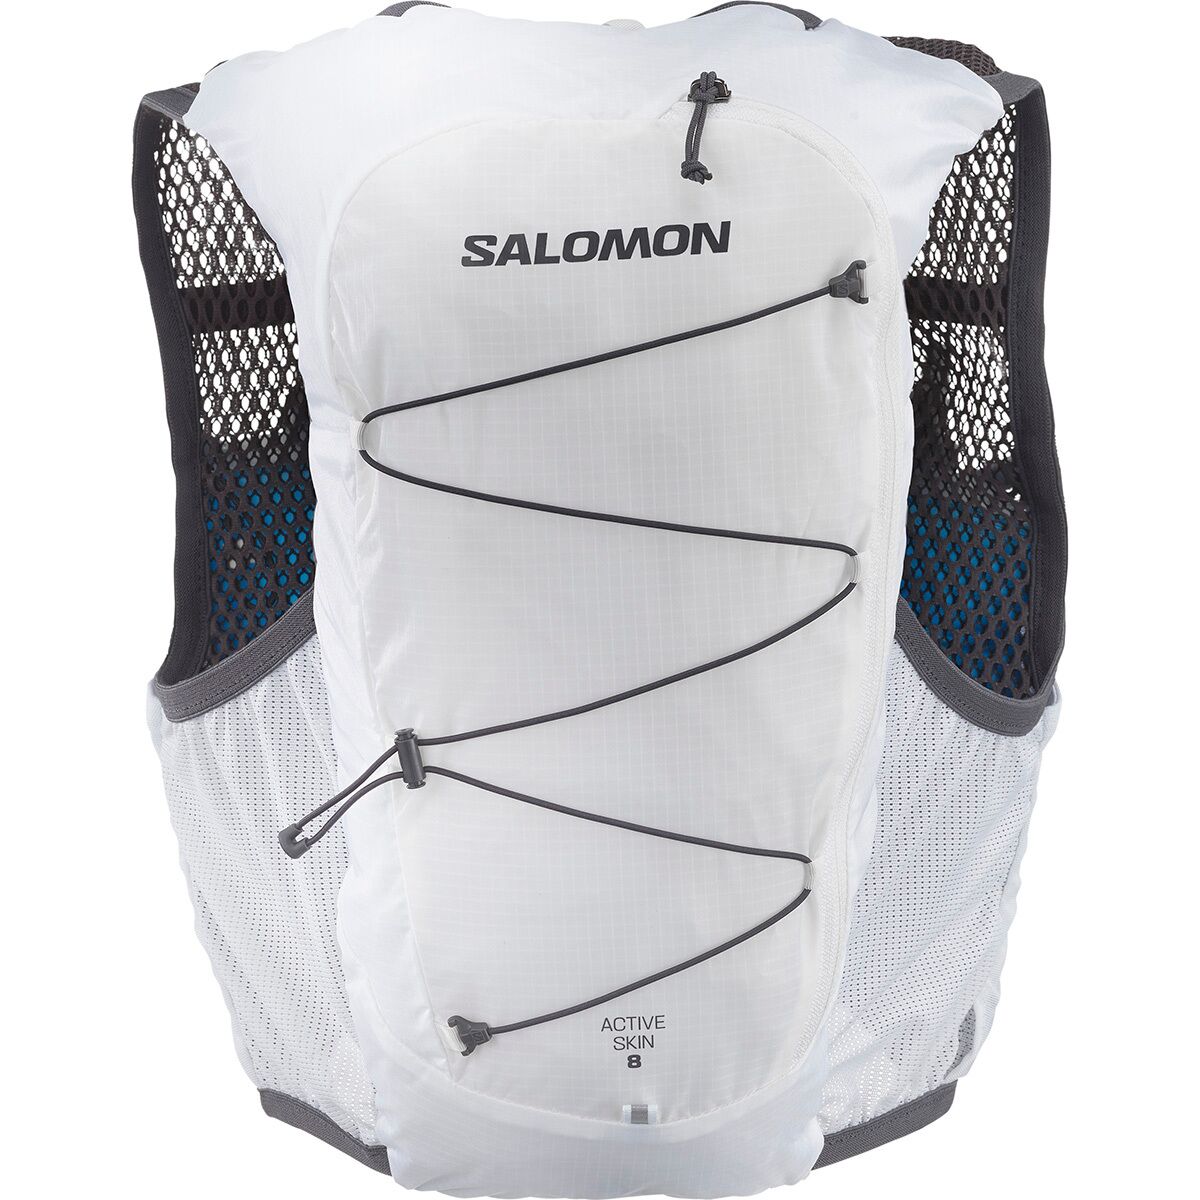 Salomon Active Skin 8 Set Vest - Women's